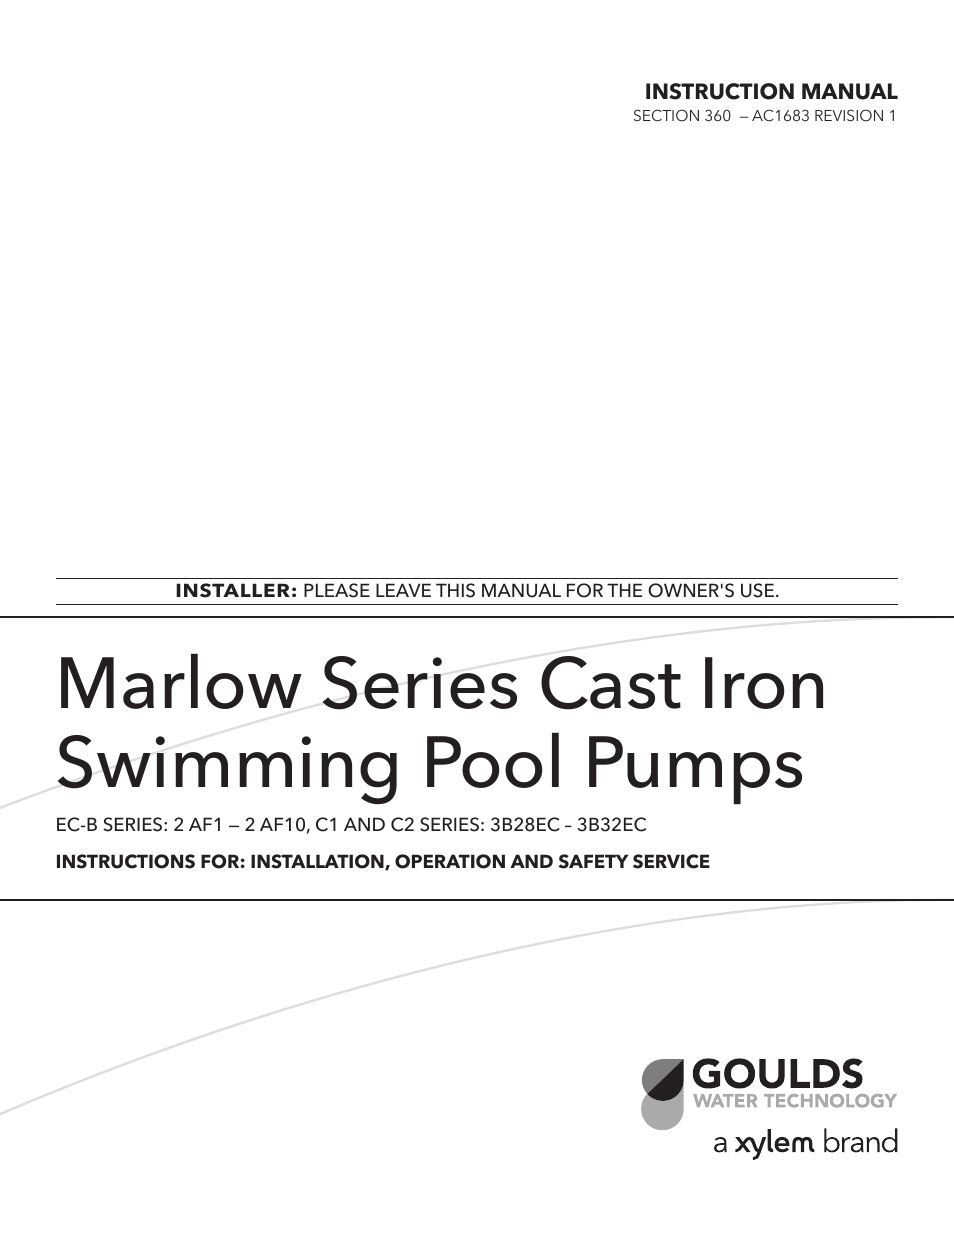 AC1683 R1 Marlow Series Cast Iron Swimming Pool Pumps